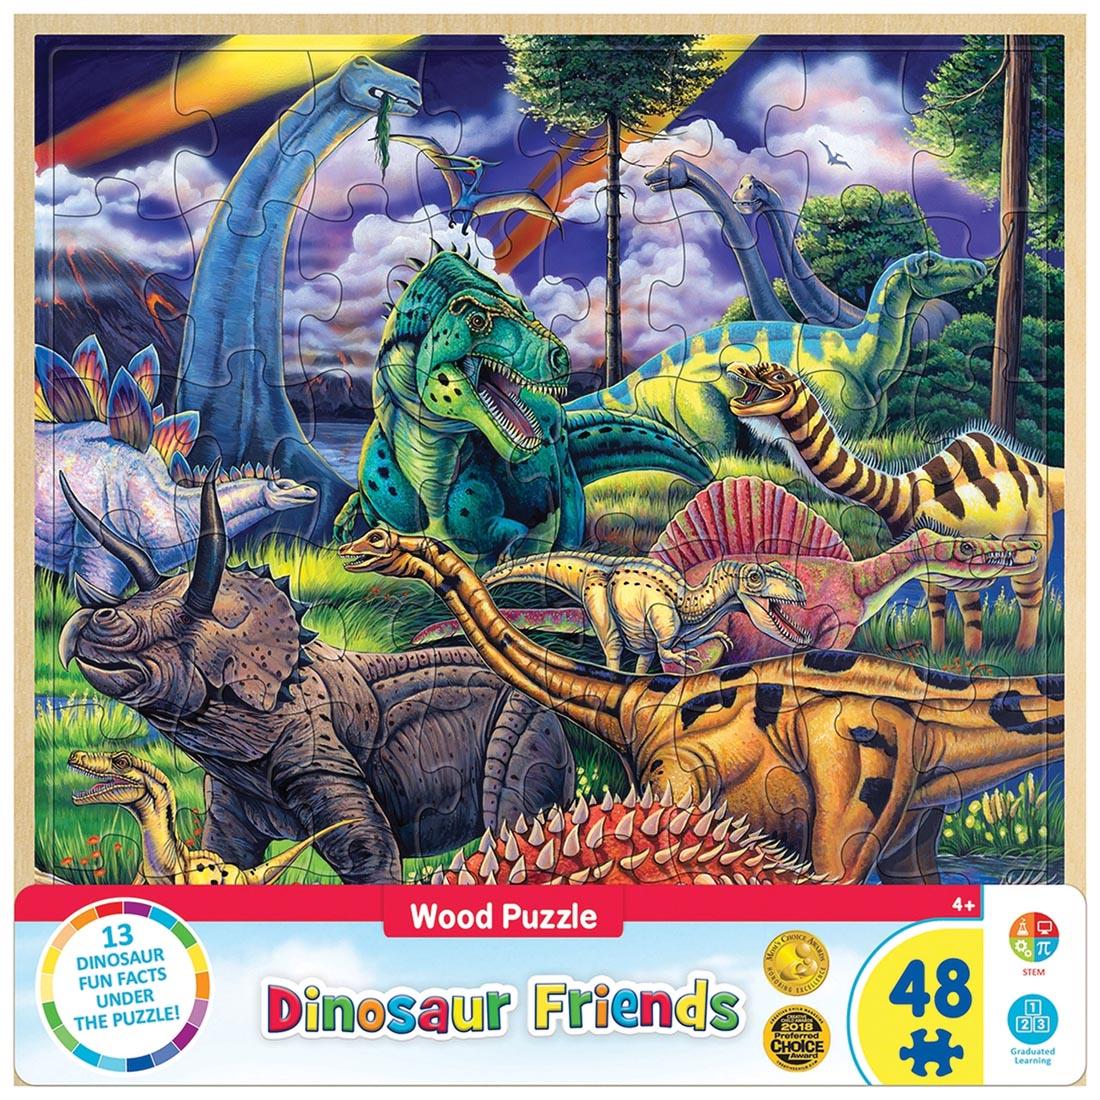 Dinosaur Friends 48-Piece Wooden Puzzle By MasterPieces